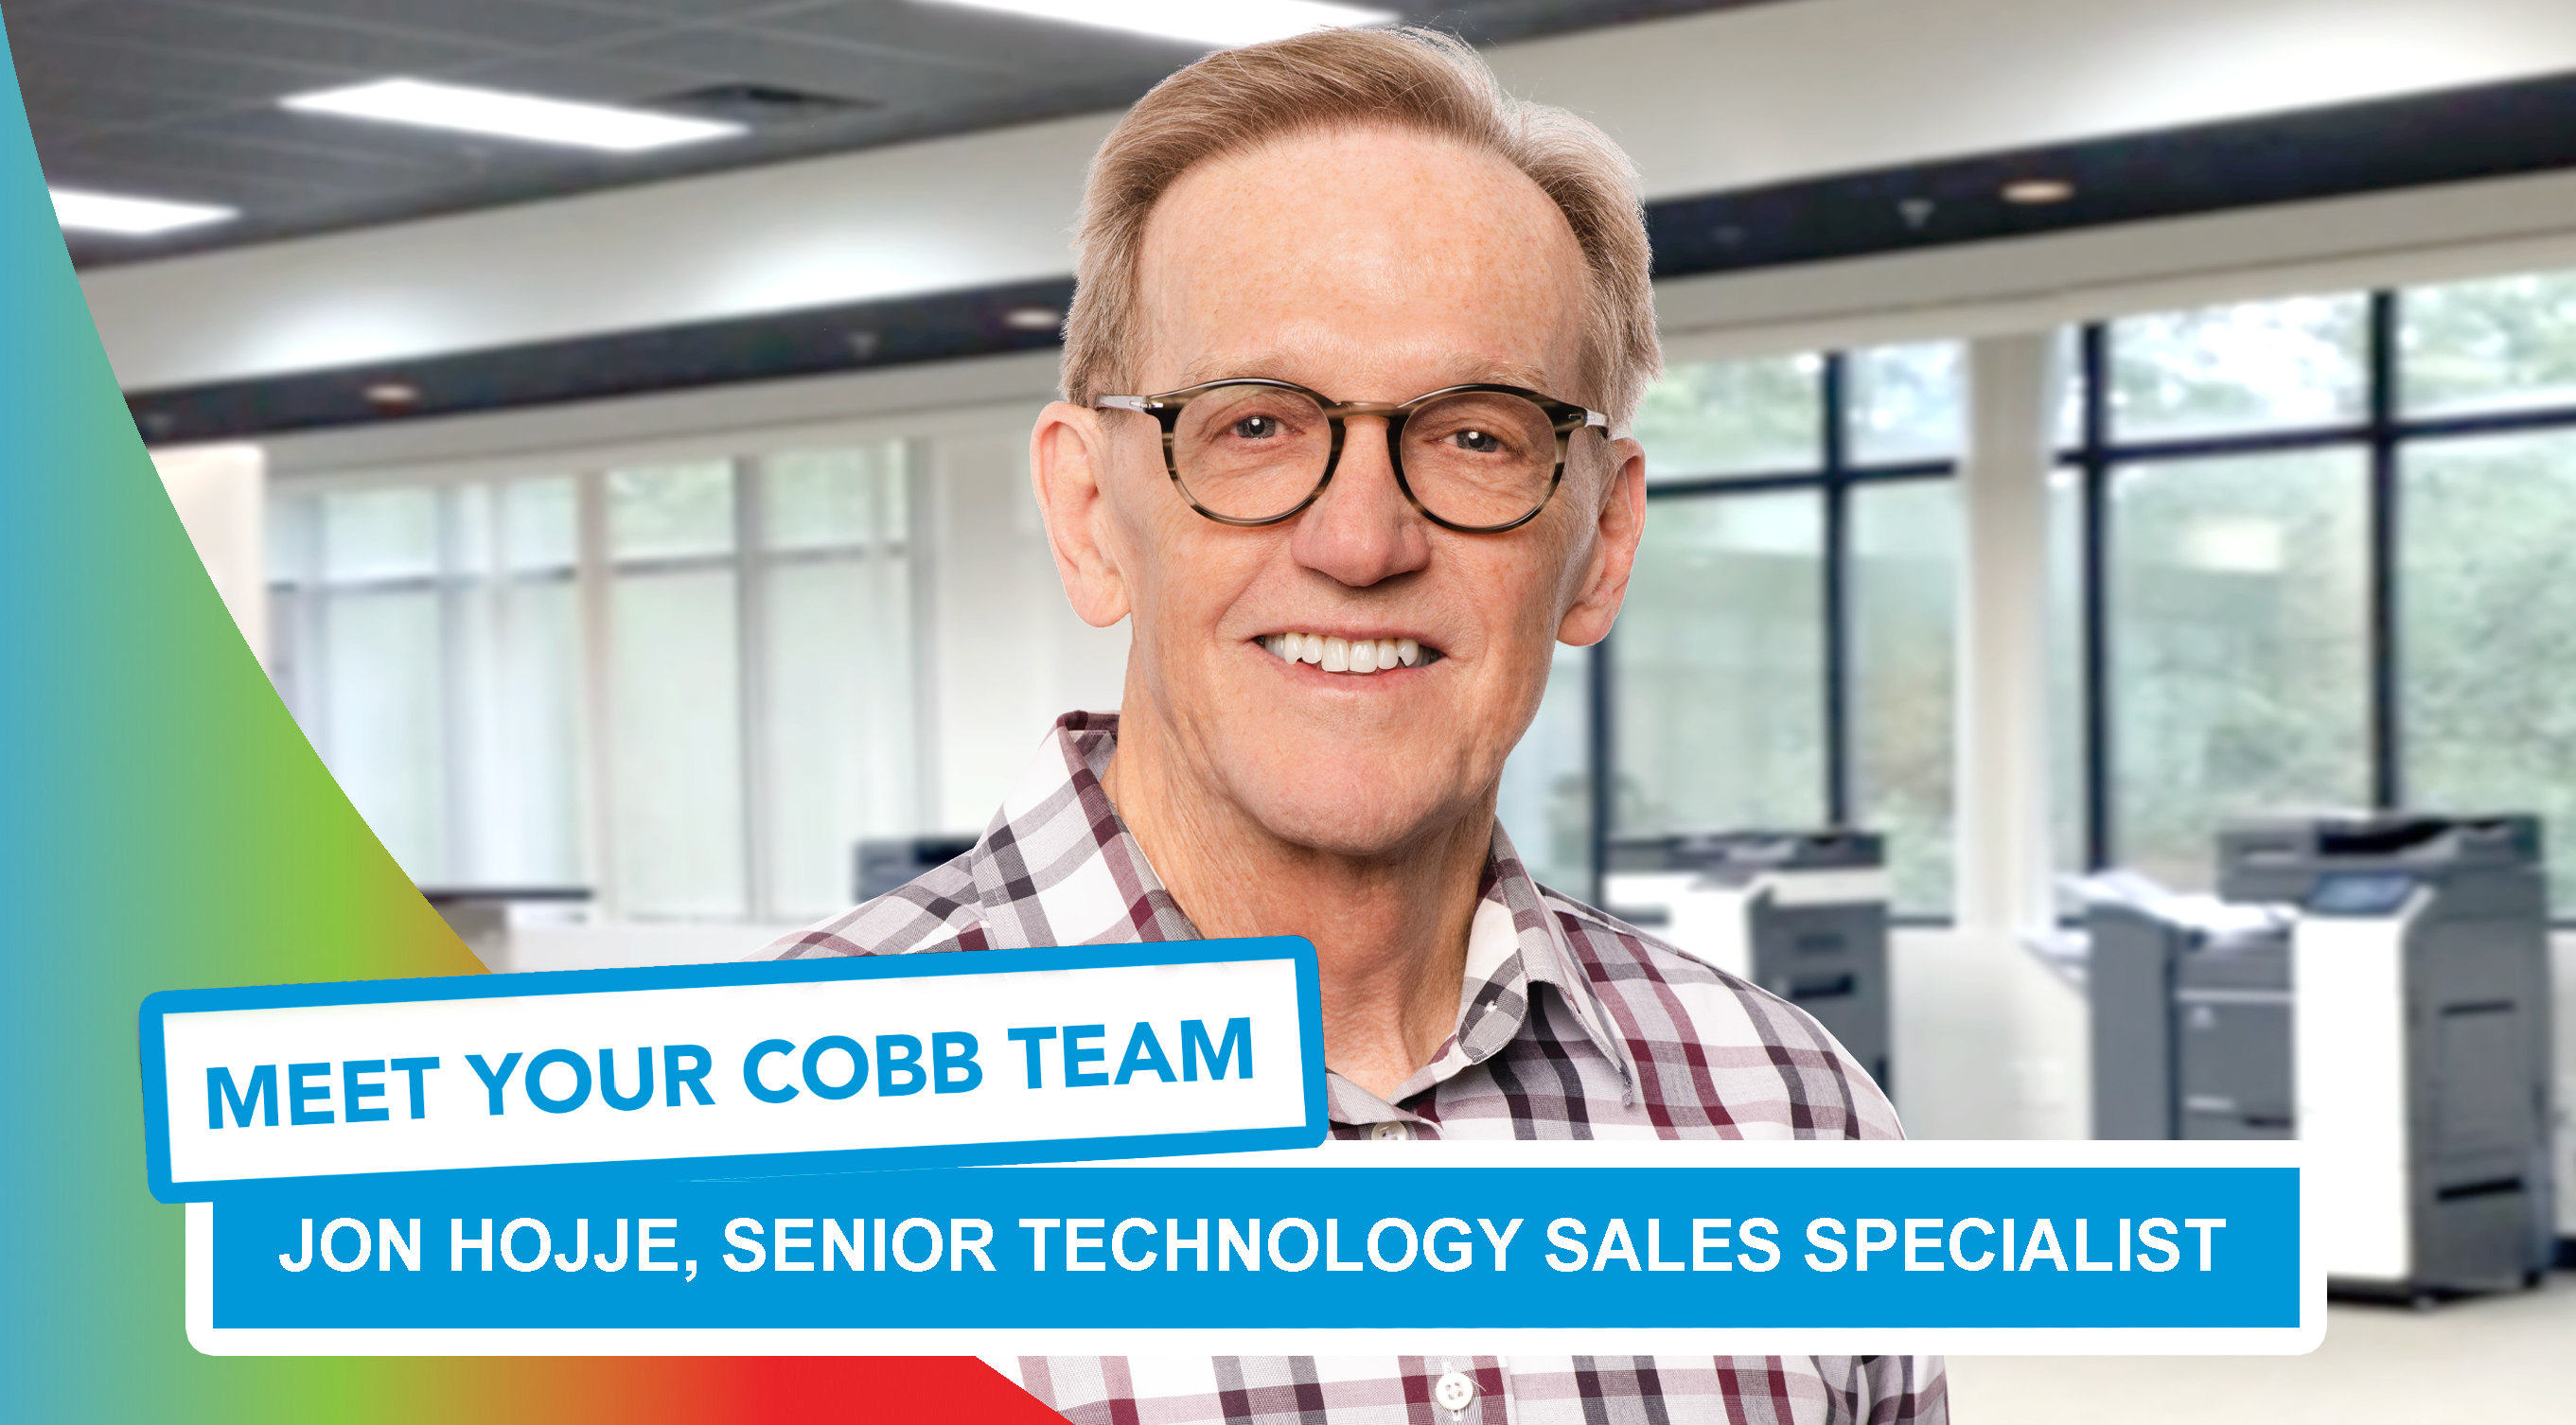 Meet Your Cobb Team: Jon Hojje, Senior Technology Sales Specialist